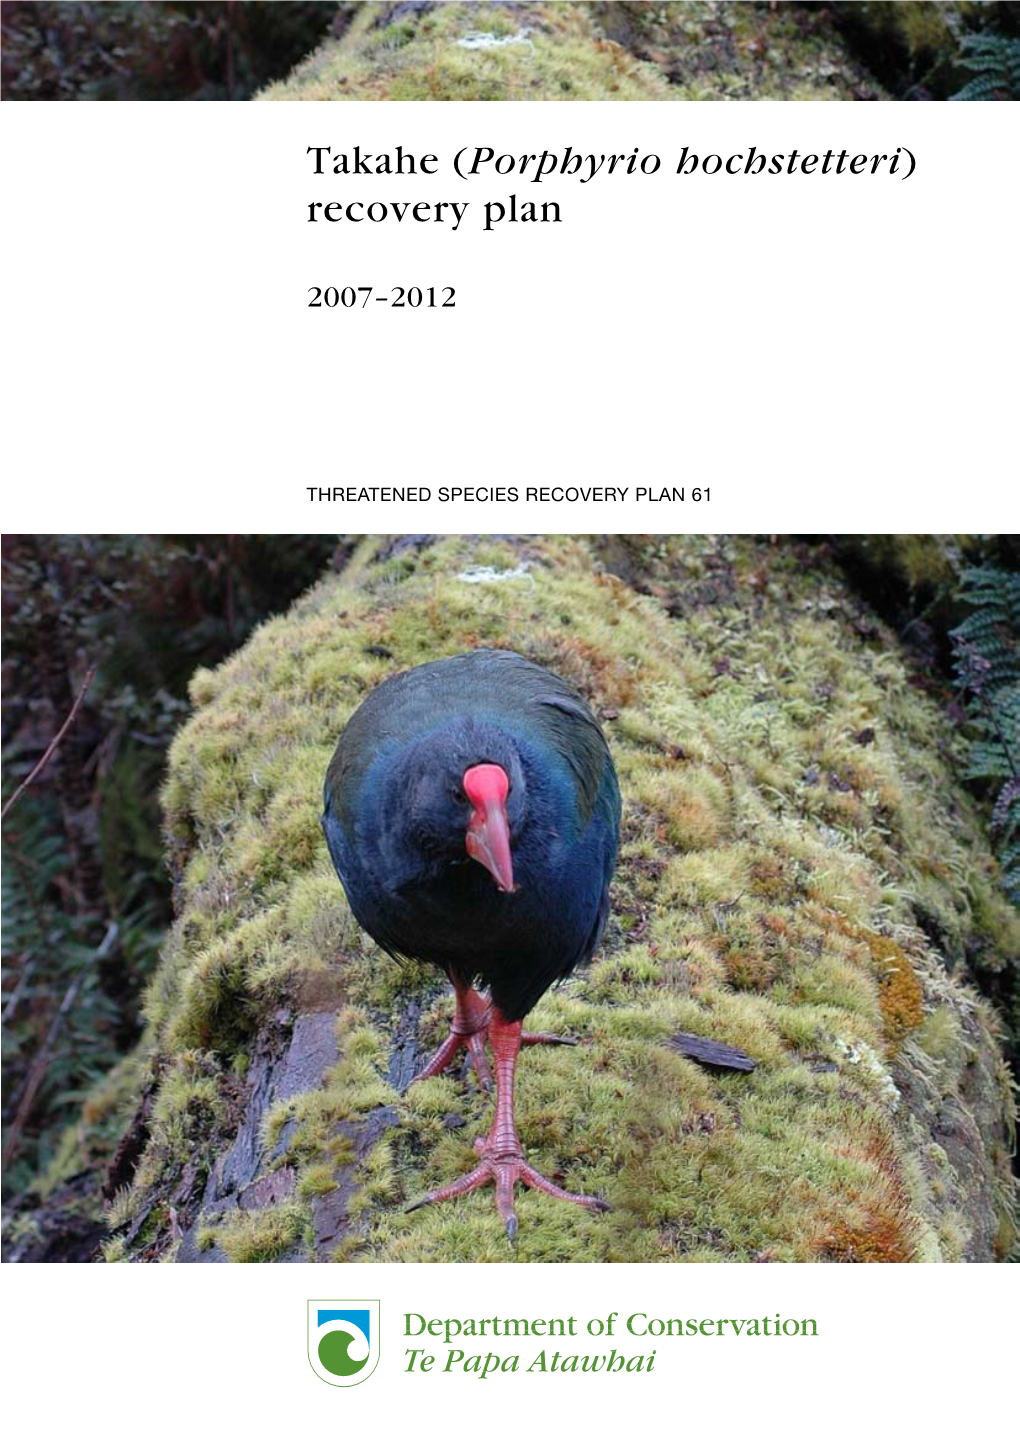 Takahe (Porphyrio Hochstetteri) Recovery Plan